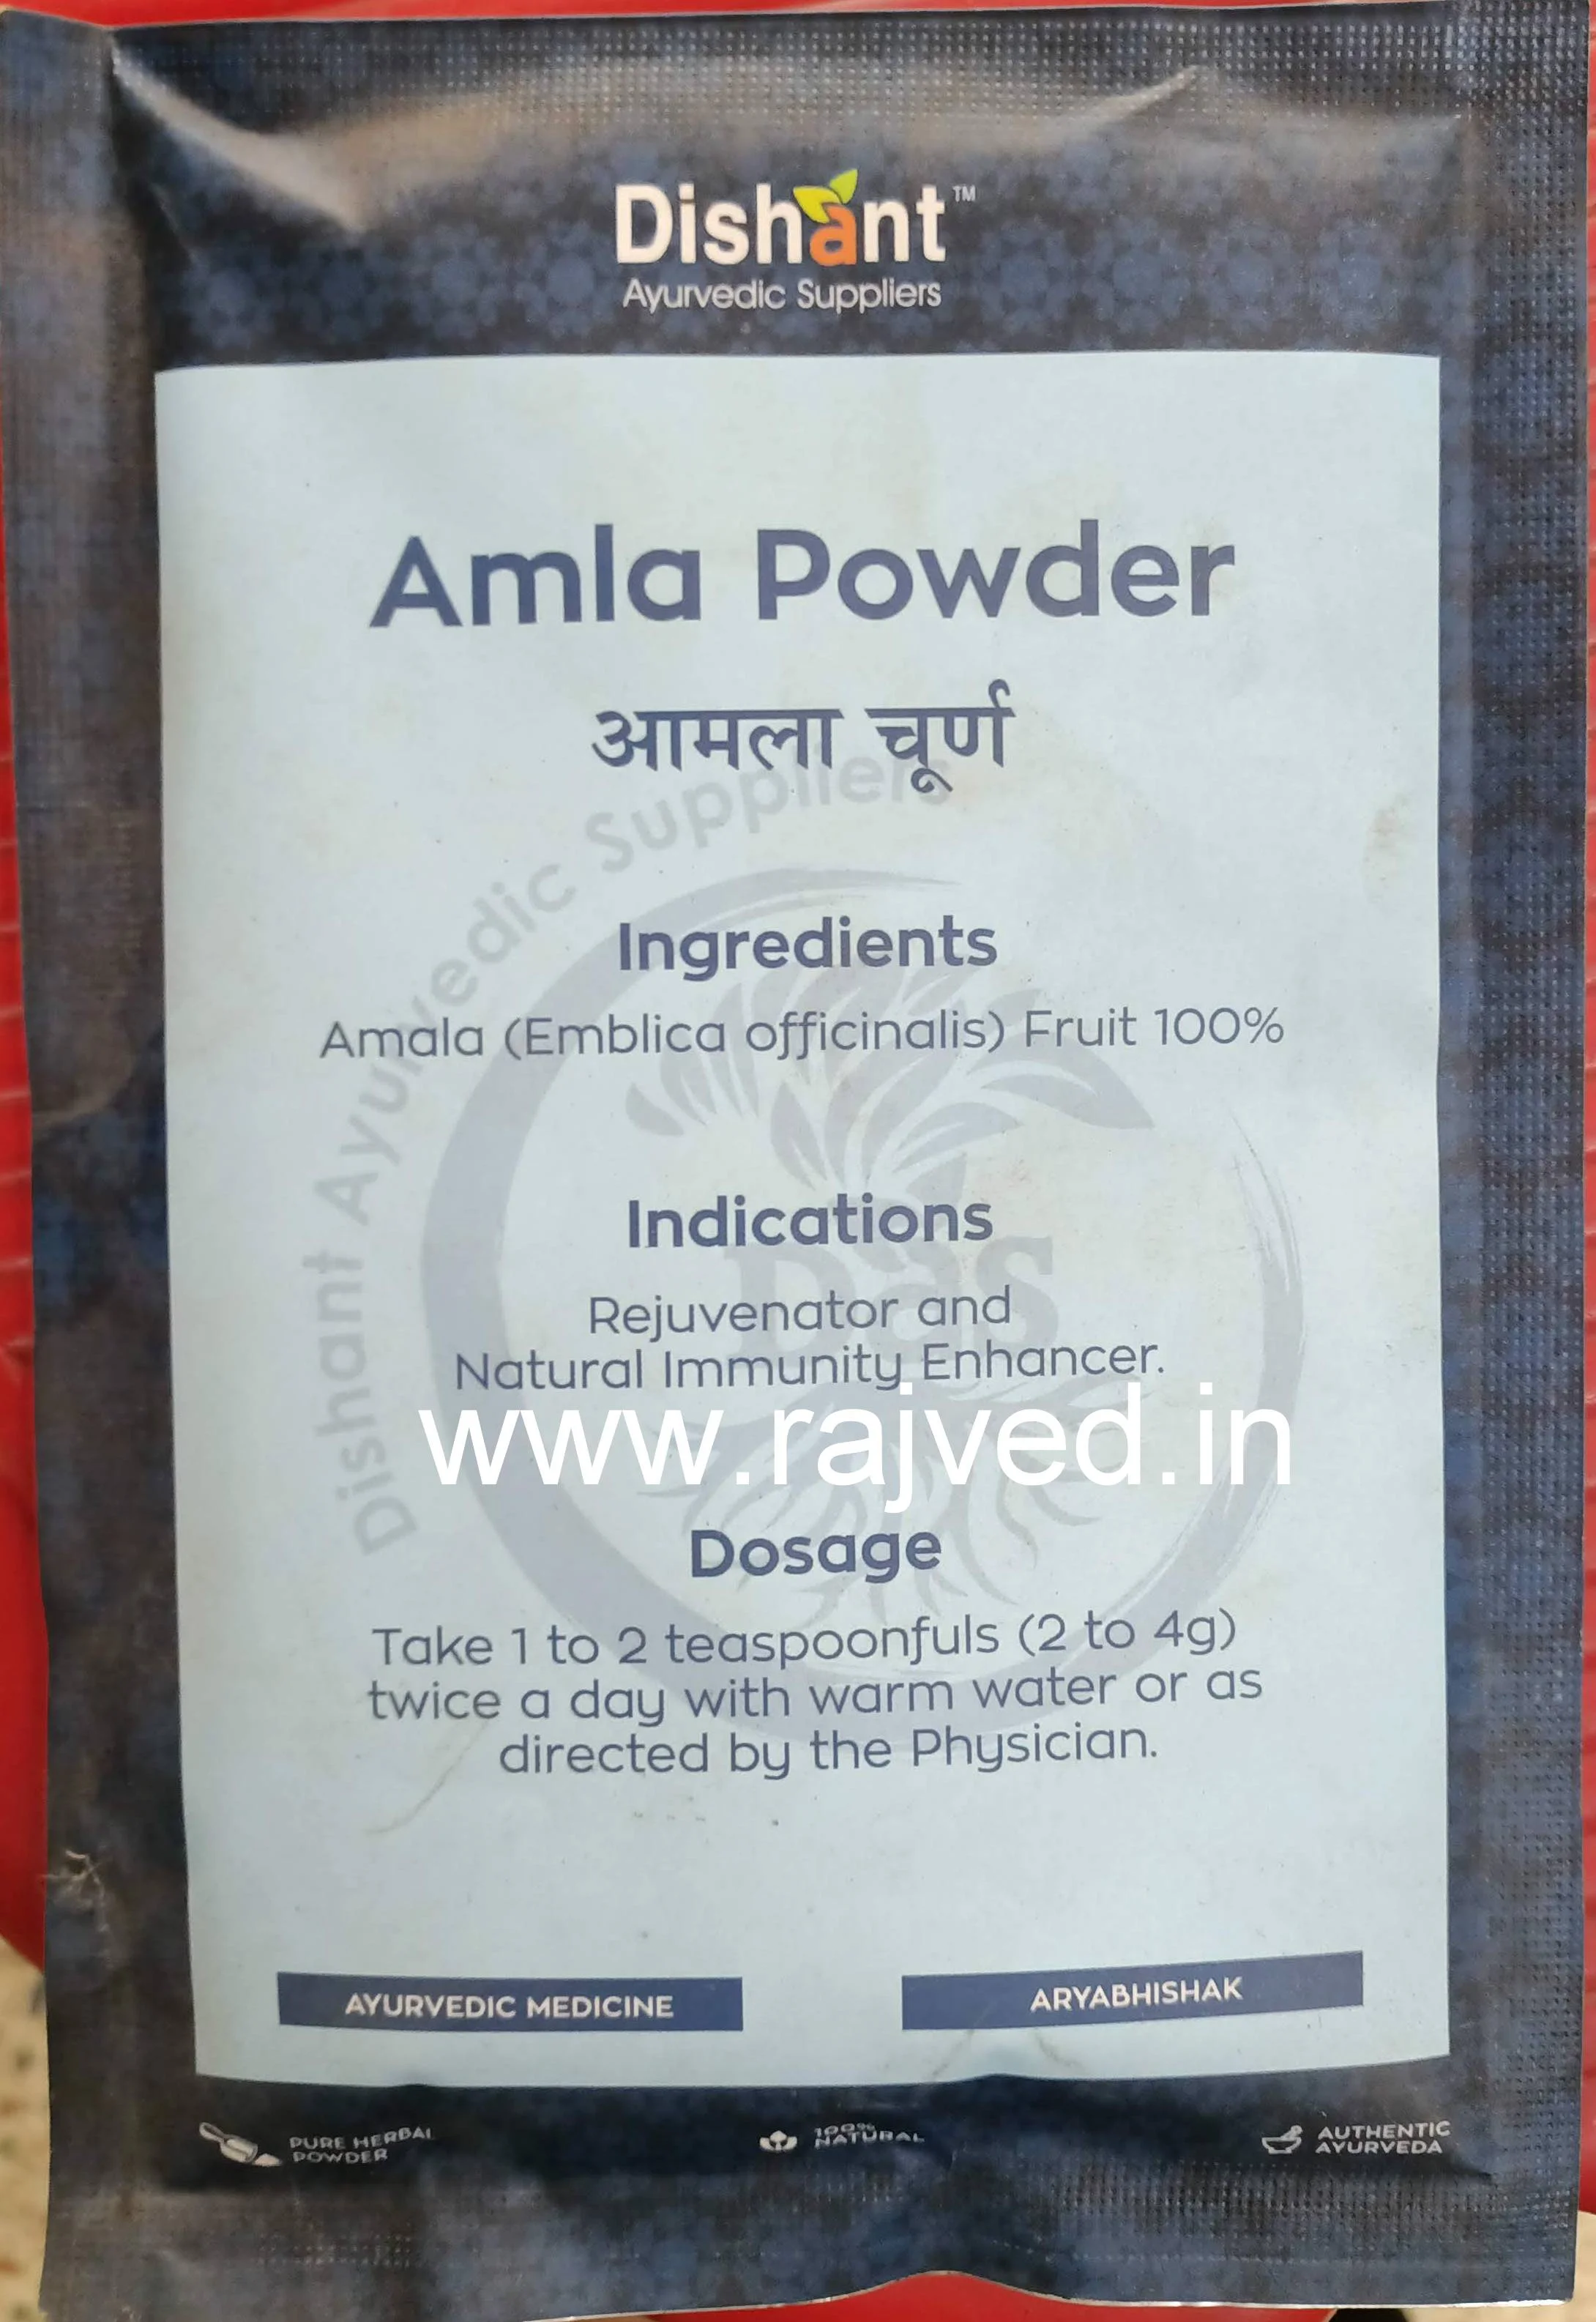 amla powder 500 gm upto 20% off dishant ayurvedic suppliers